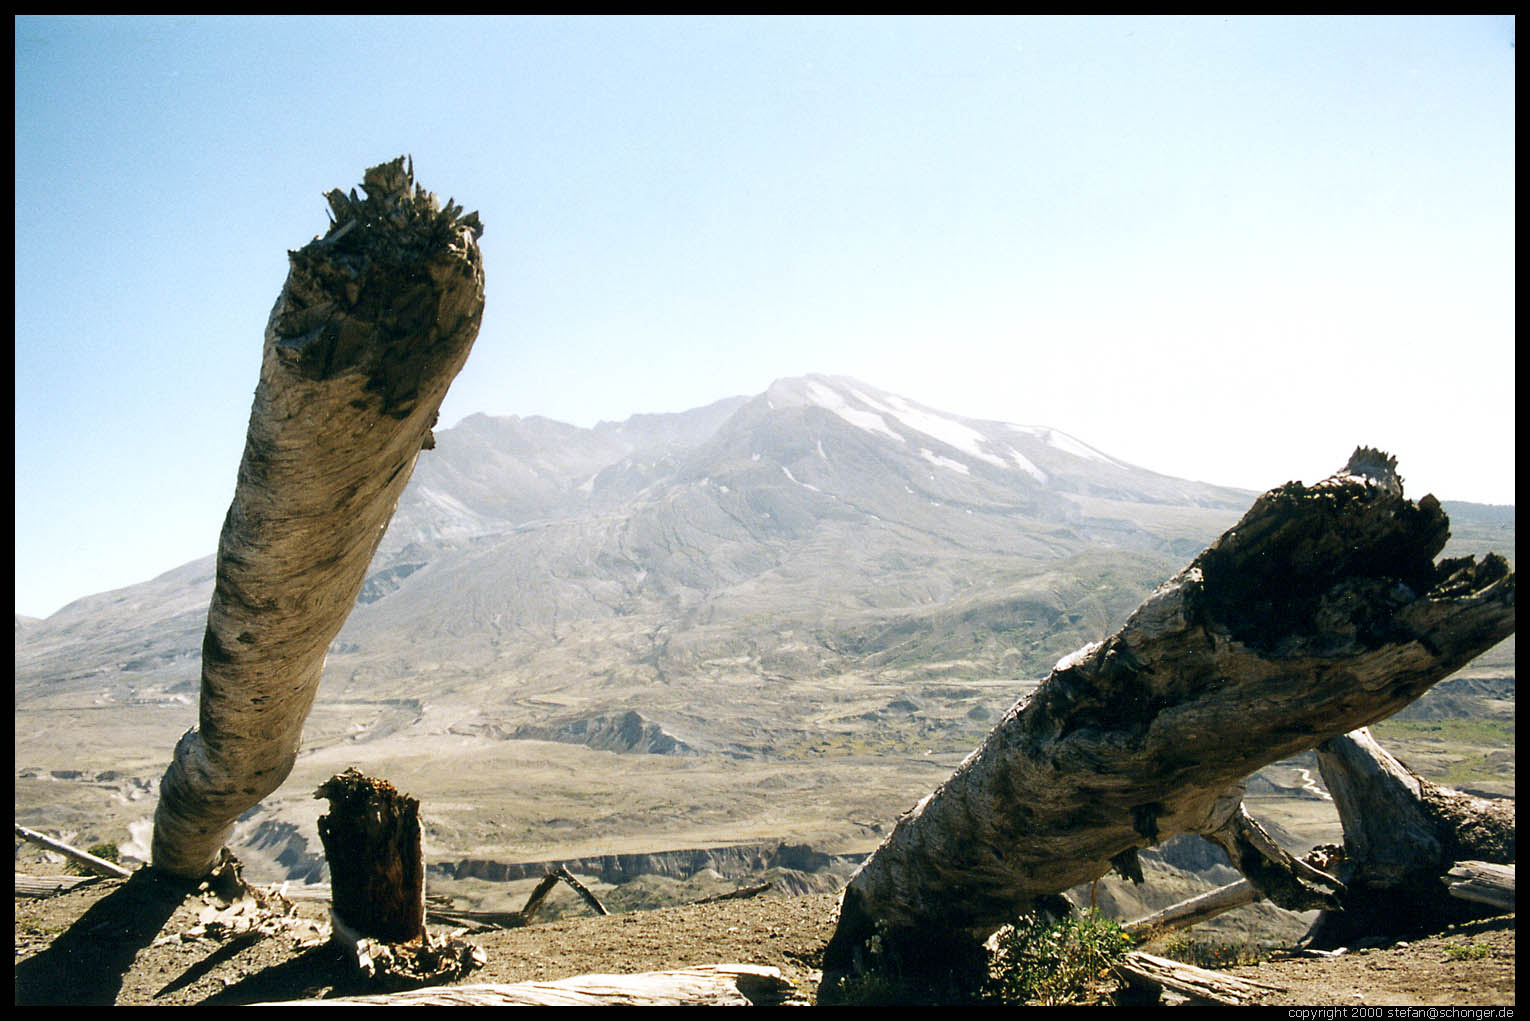 Mount St Helens. WA, August 2000